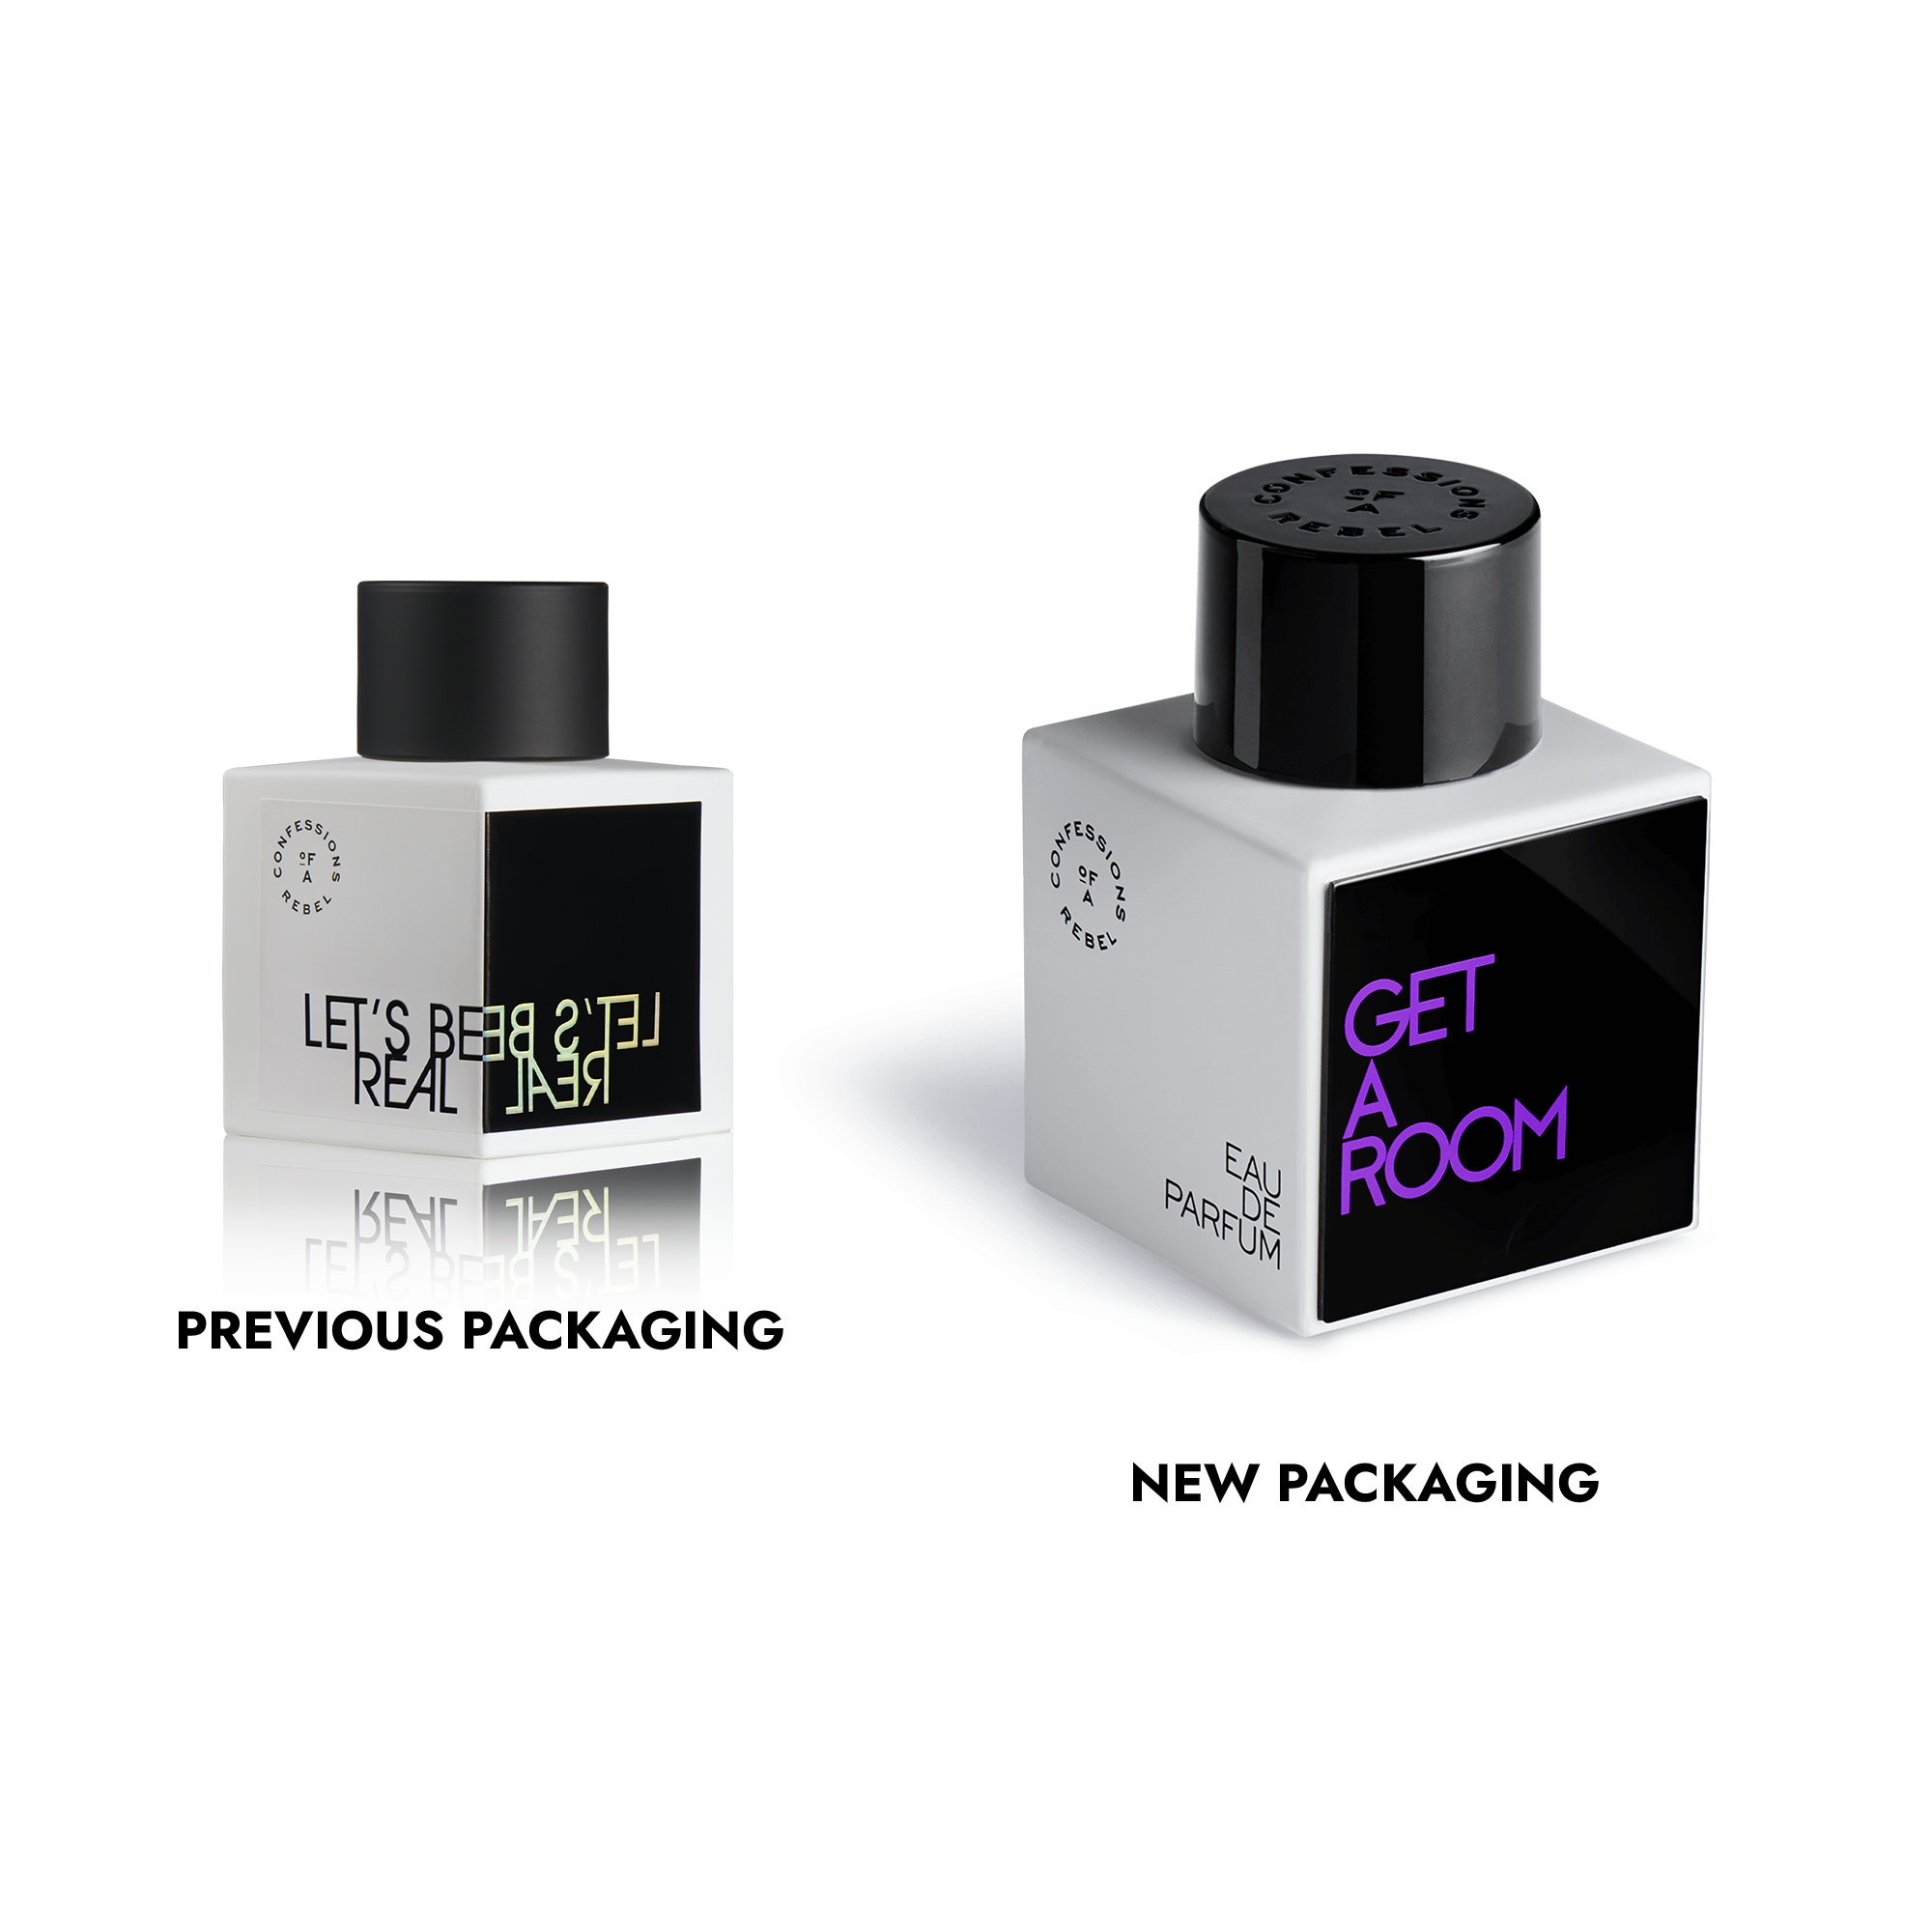 California Dream LV Eau De Parfum for women and men 100ml Oil Based Perfumes  long lasting scent Authentic Tester